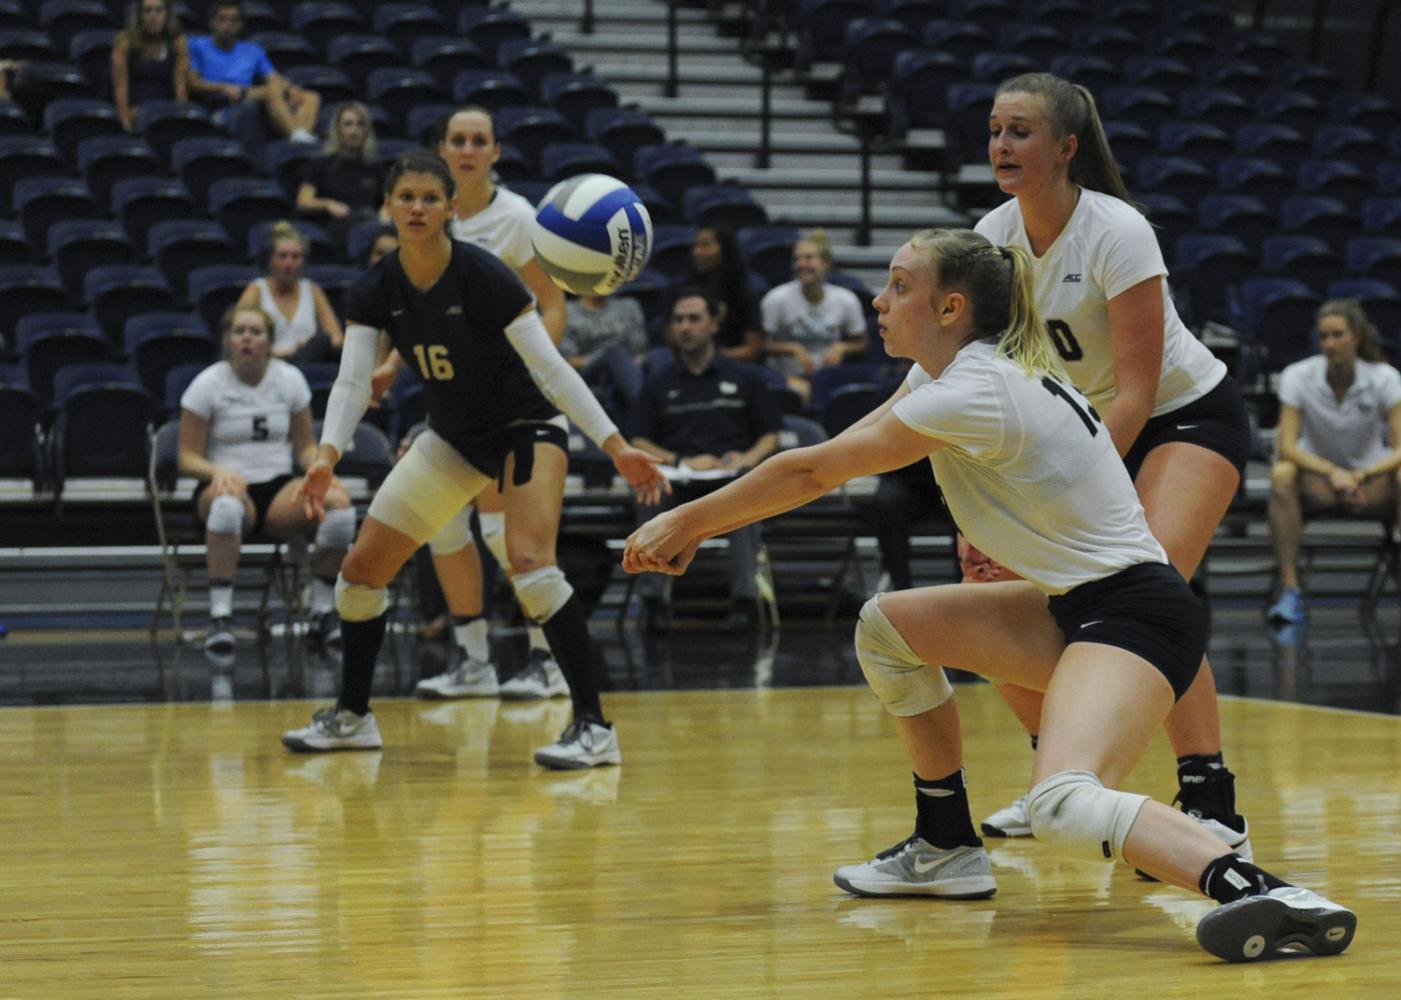 Women's volleyball goes 1-1 at Dayton Invitational - The Pitt News